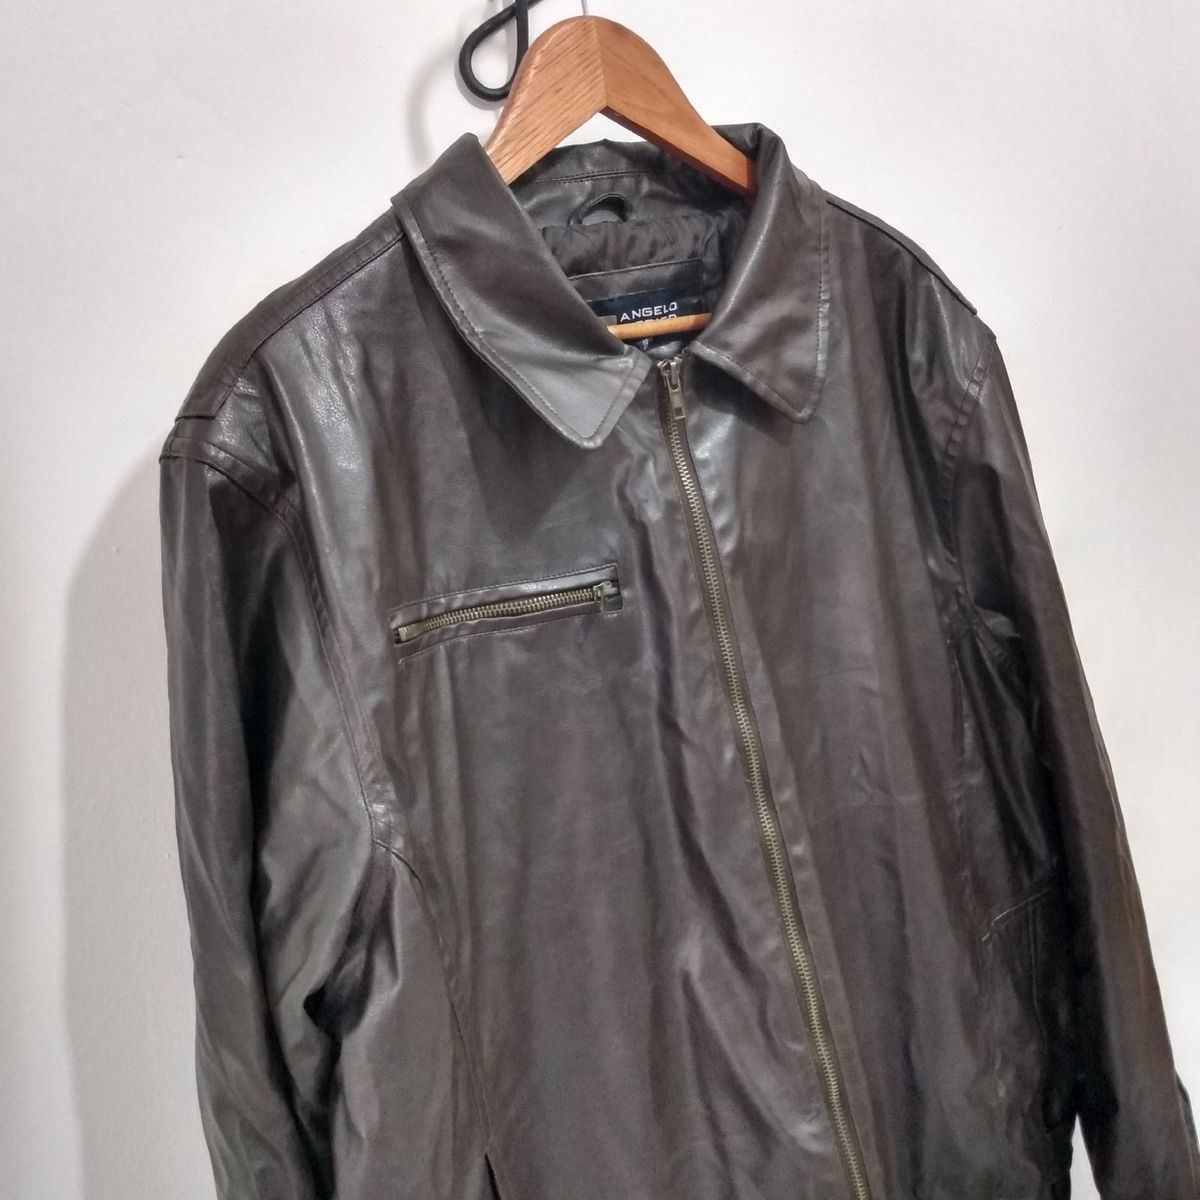 jaqueta de couro sintetico masculina c&a